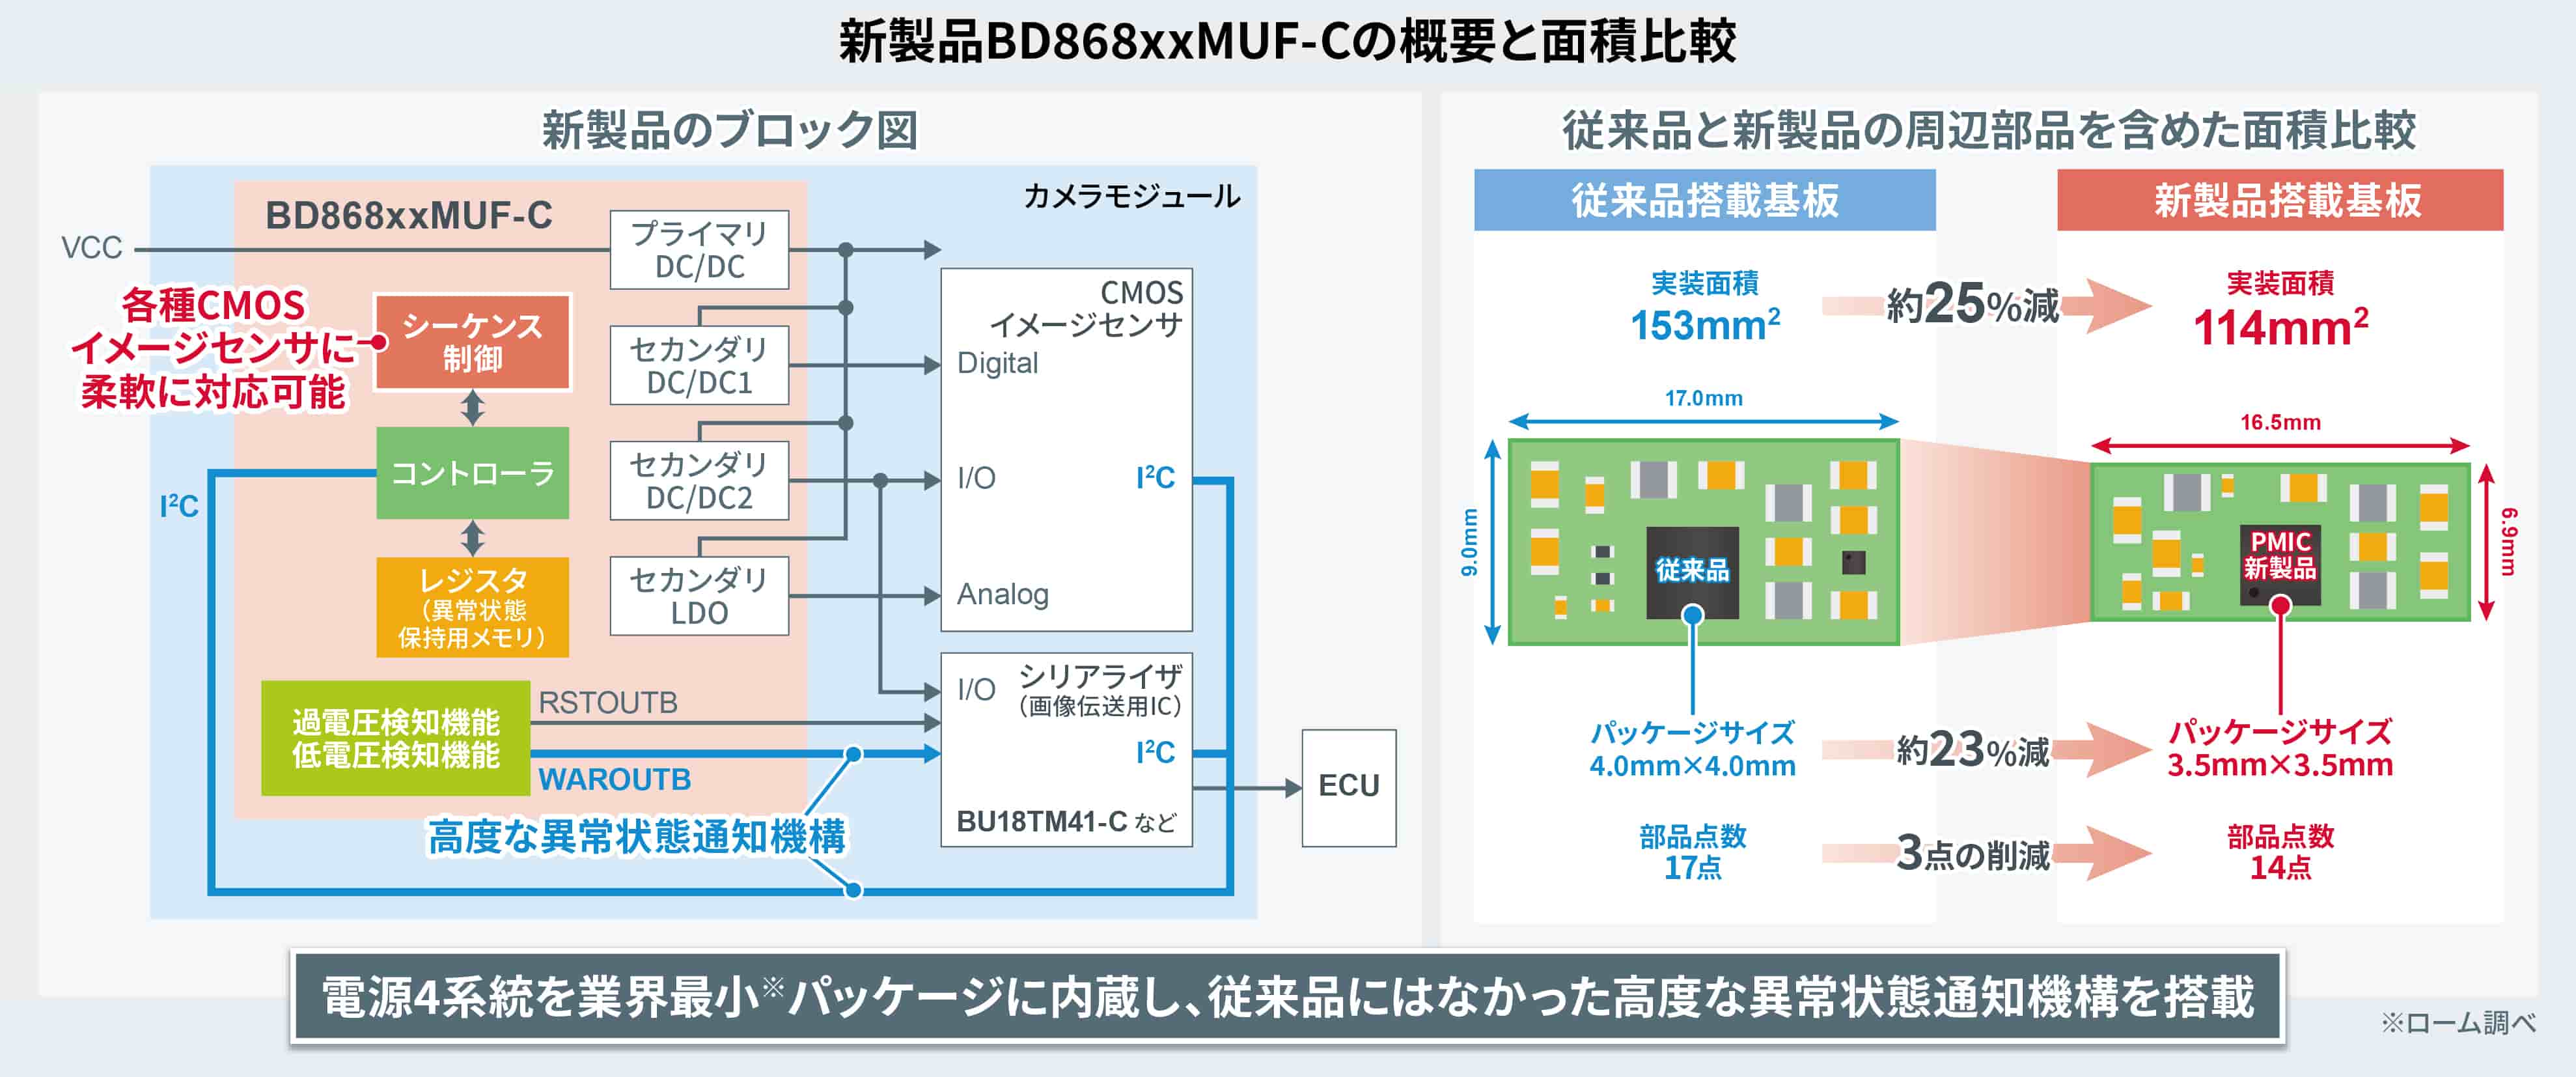 新製品BD868xxMUF-Cの概要と面積比較